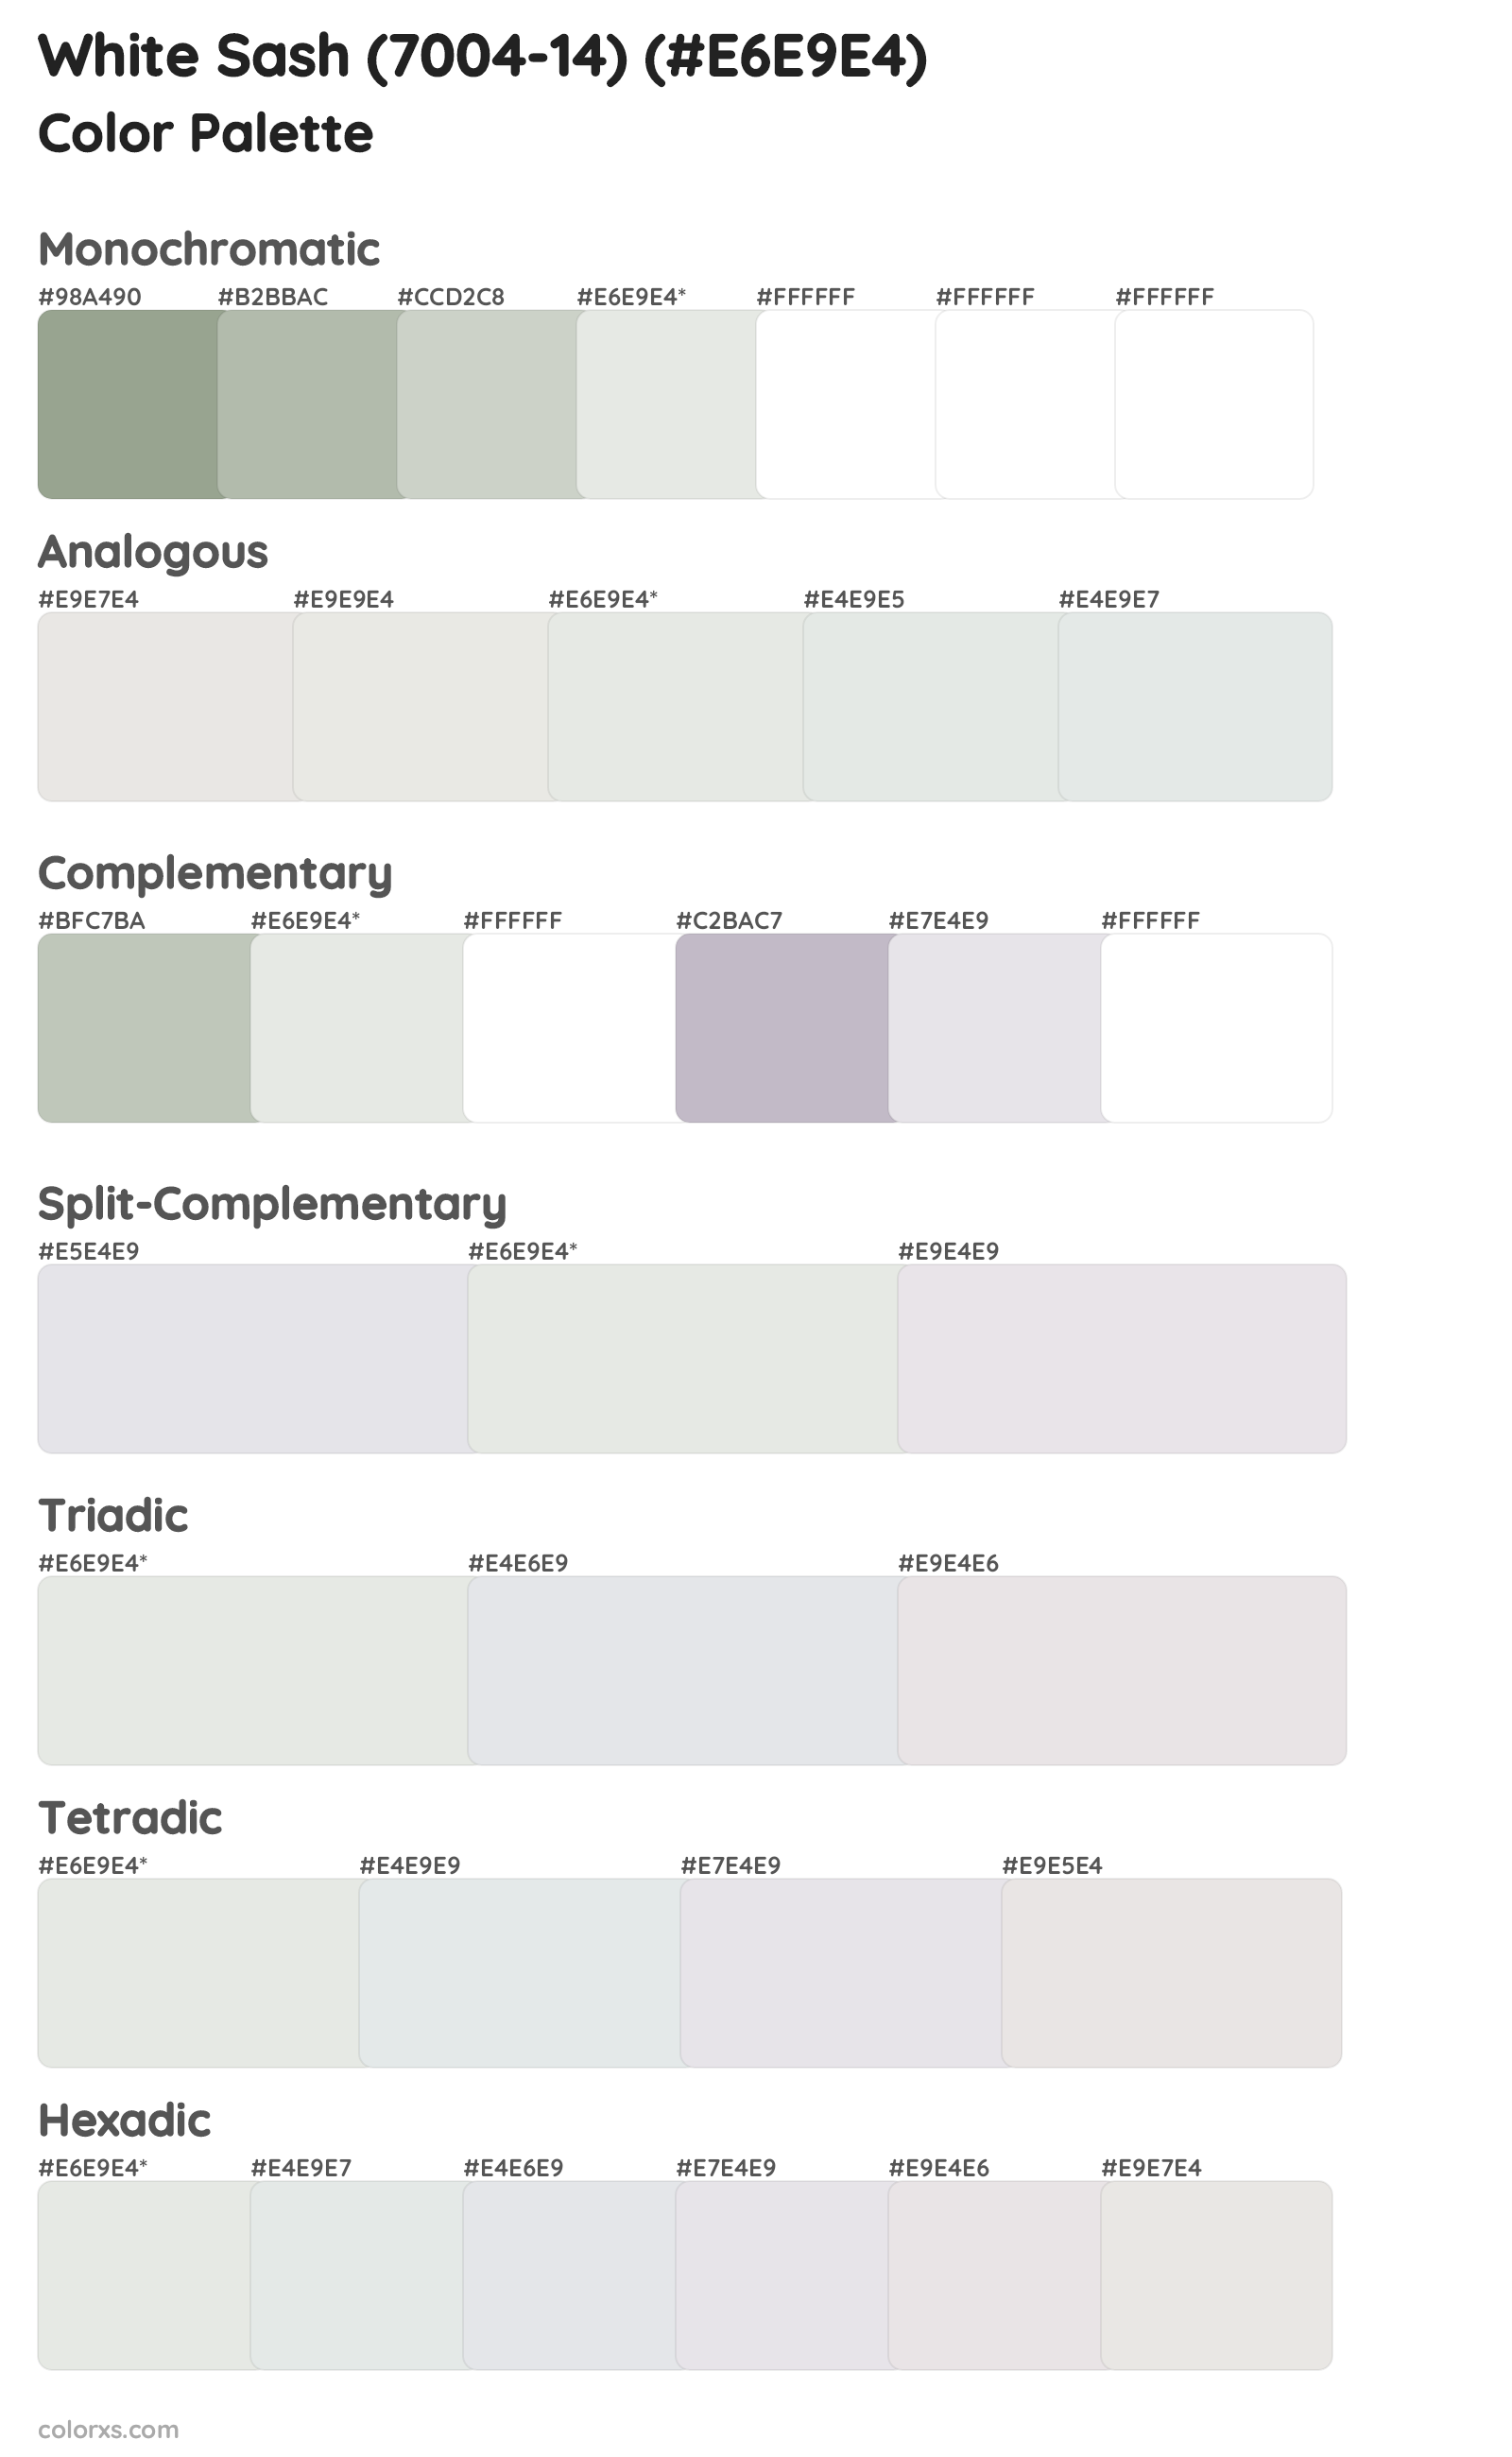 White Sash (7004-14) Color Scheme Palettes